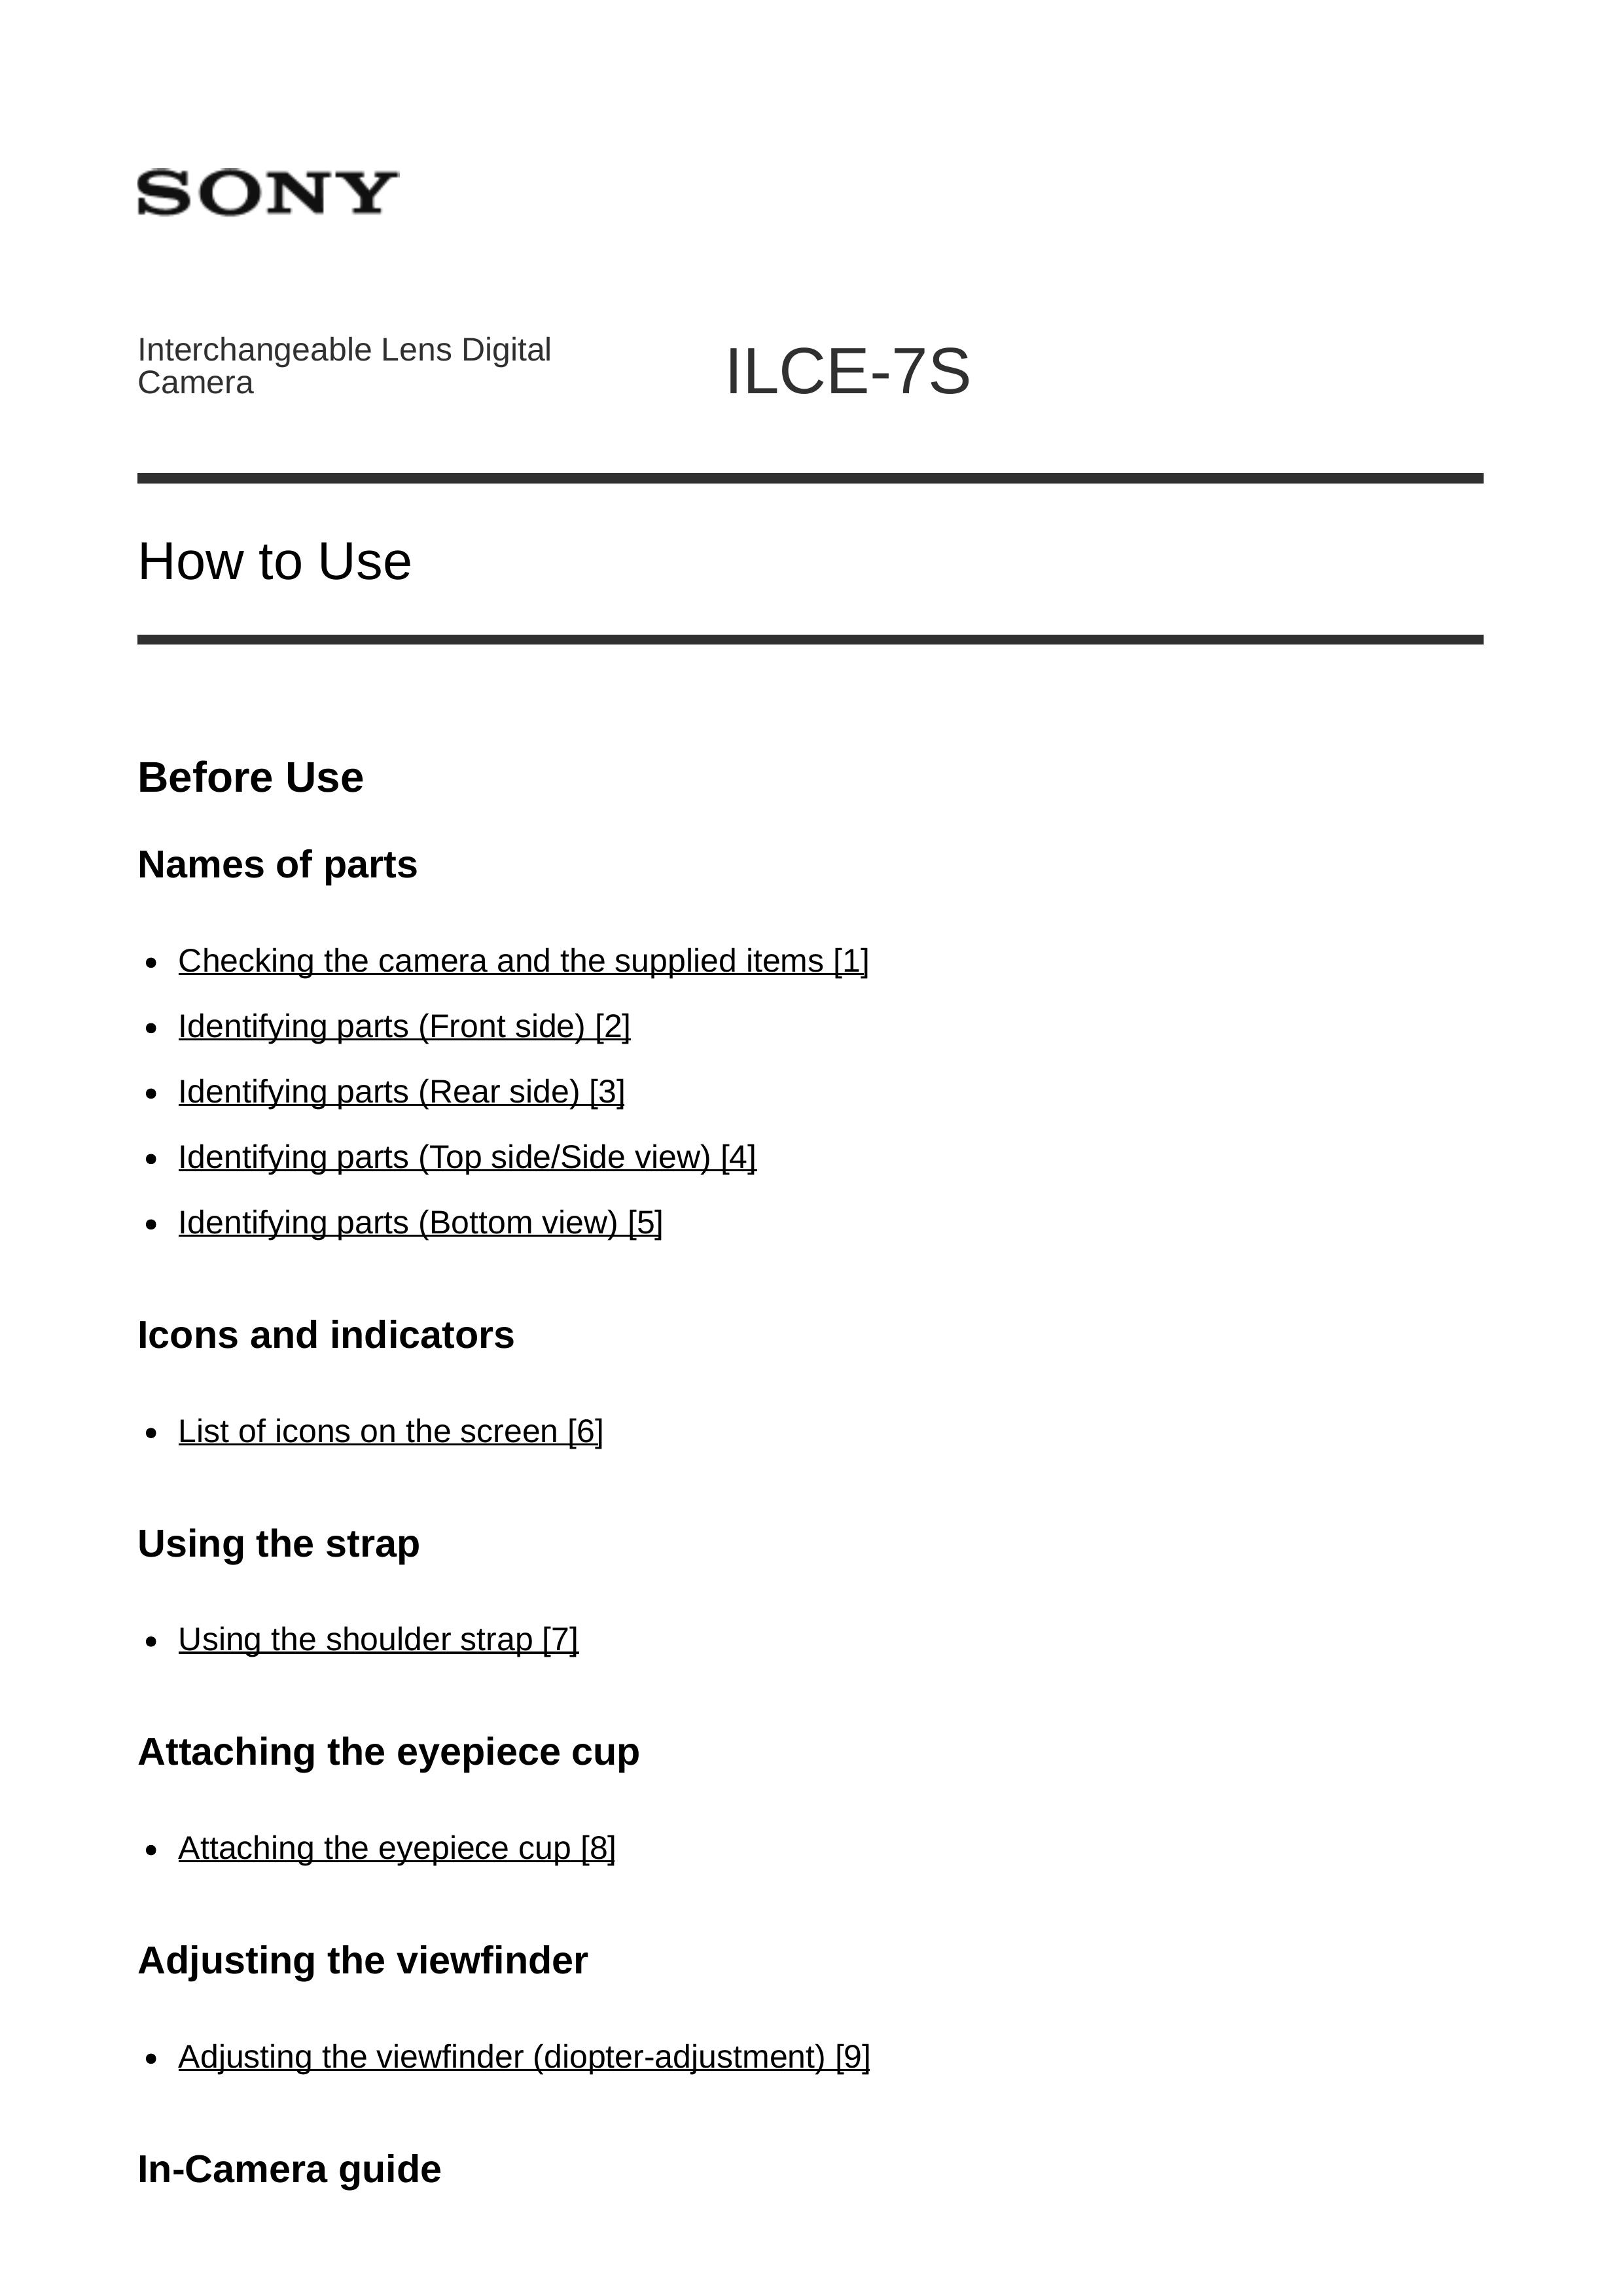 Sony ILCE-7S Camera Lens User Manual